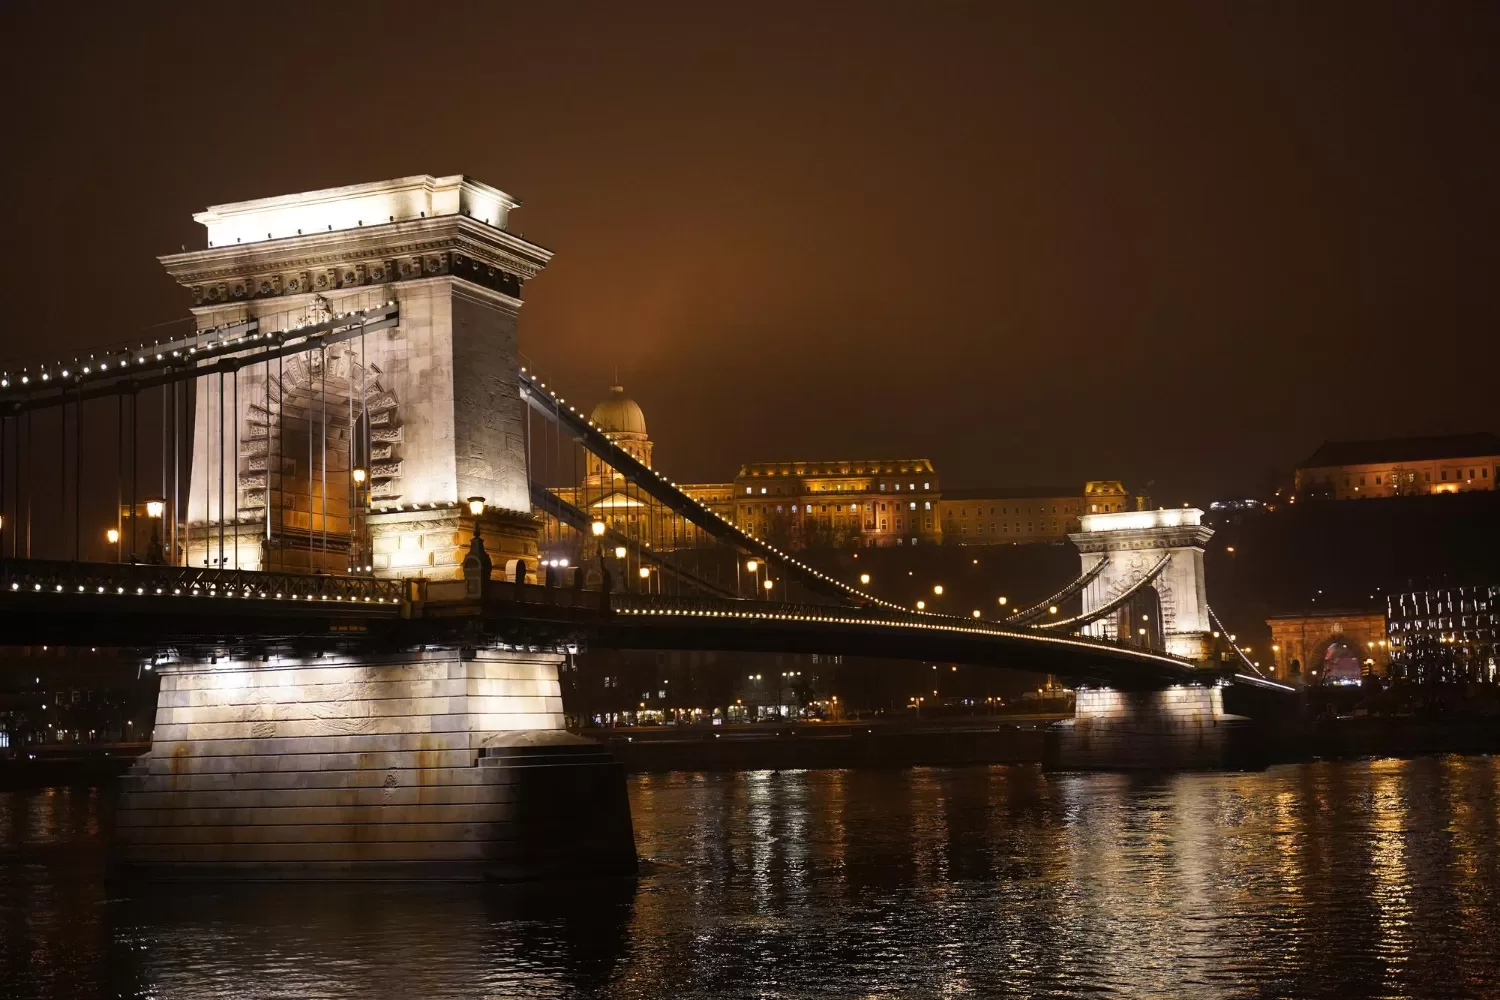 Szechenyi Chain Bridge, Budapest